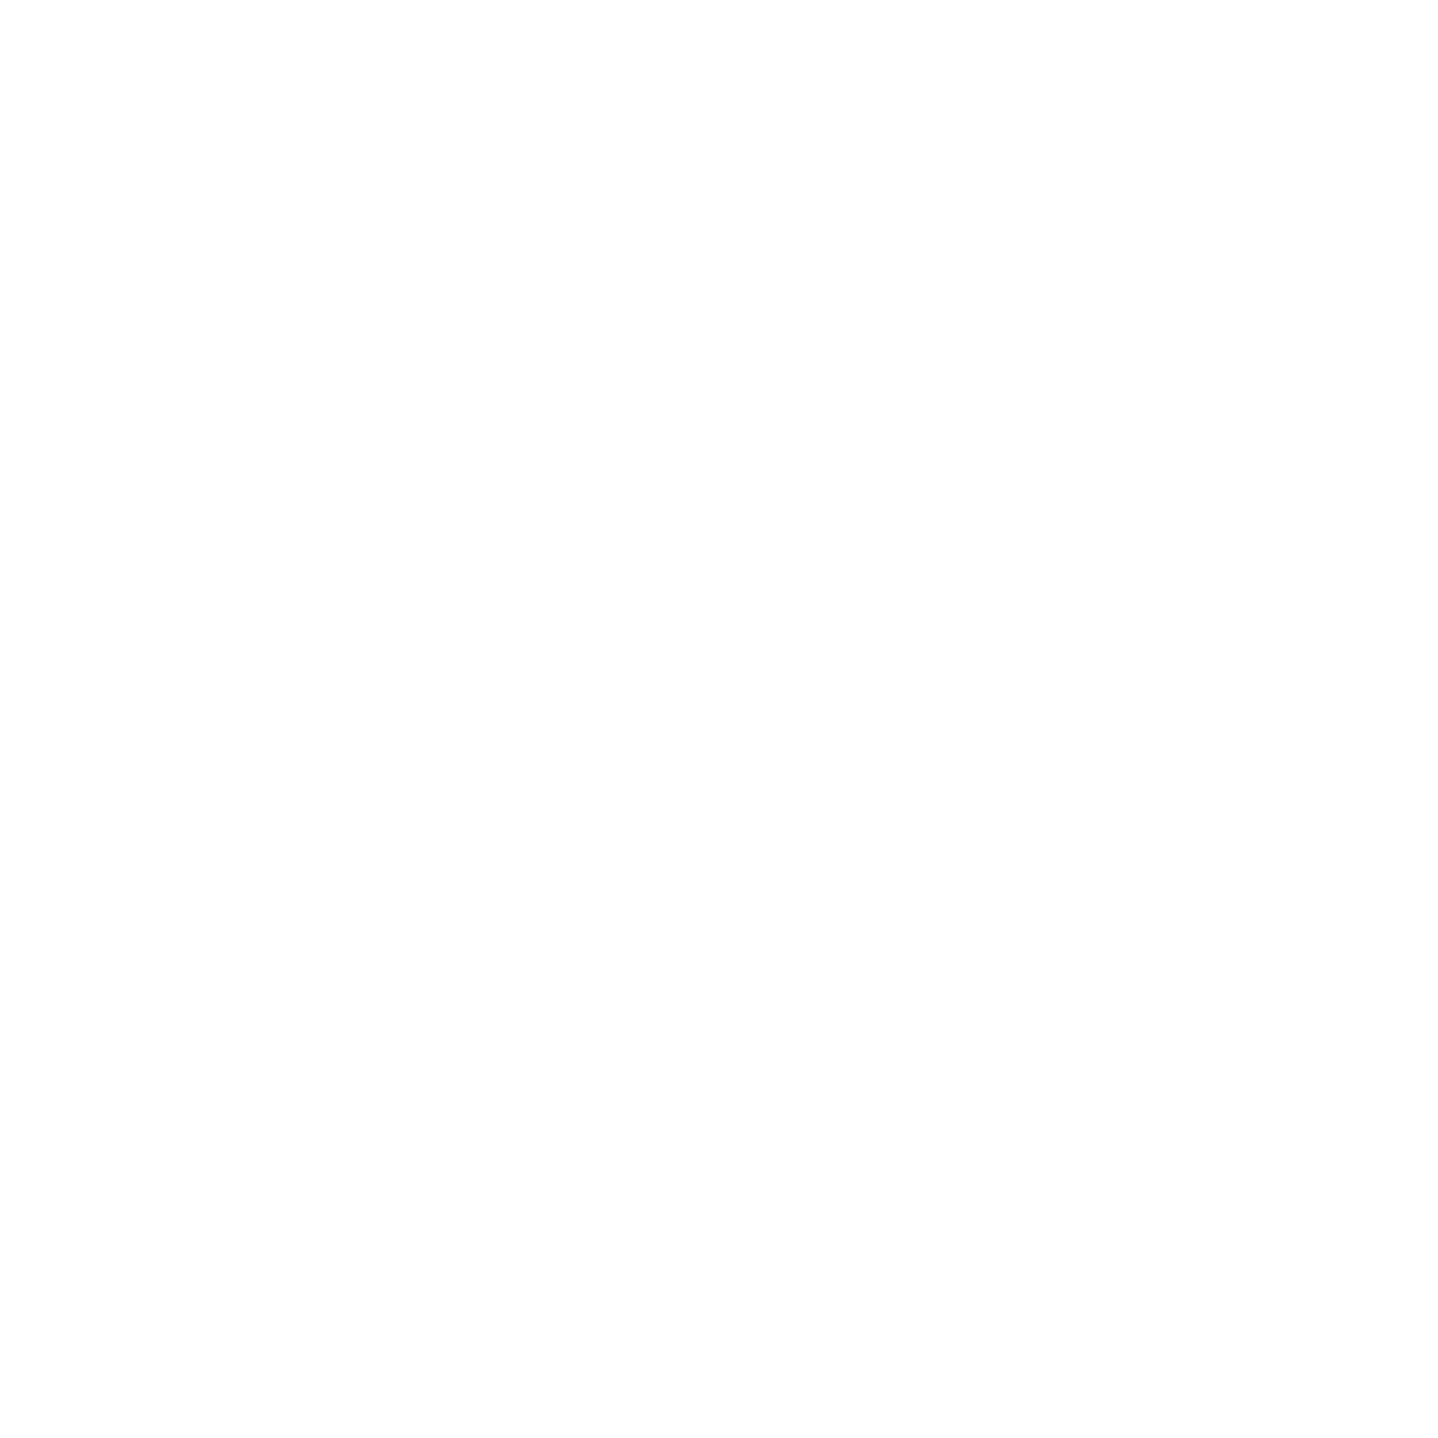 The Daniel Boyer Team